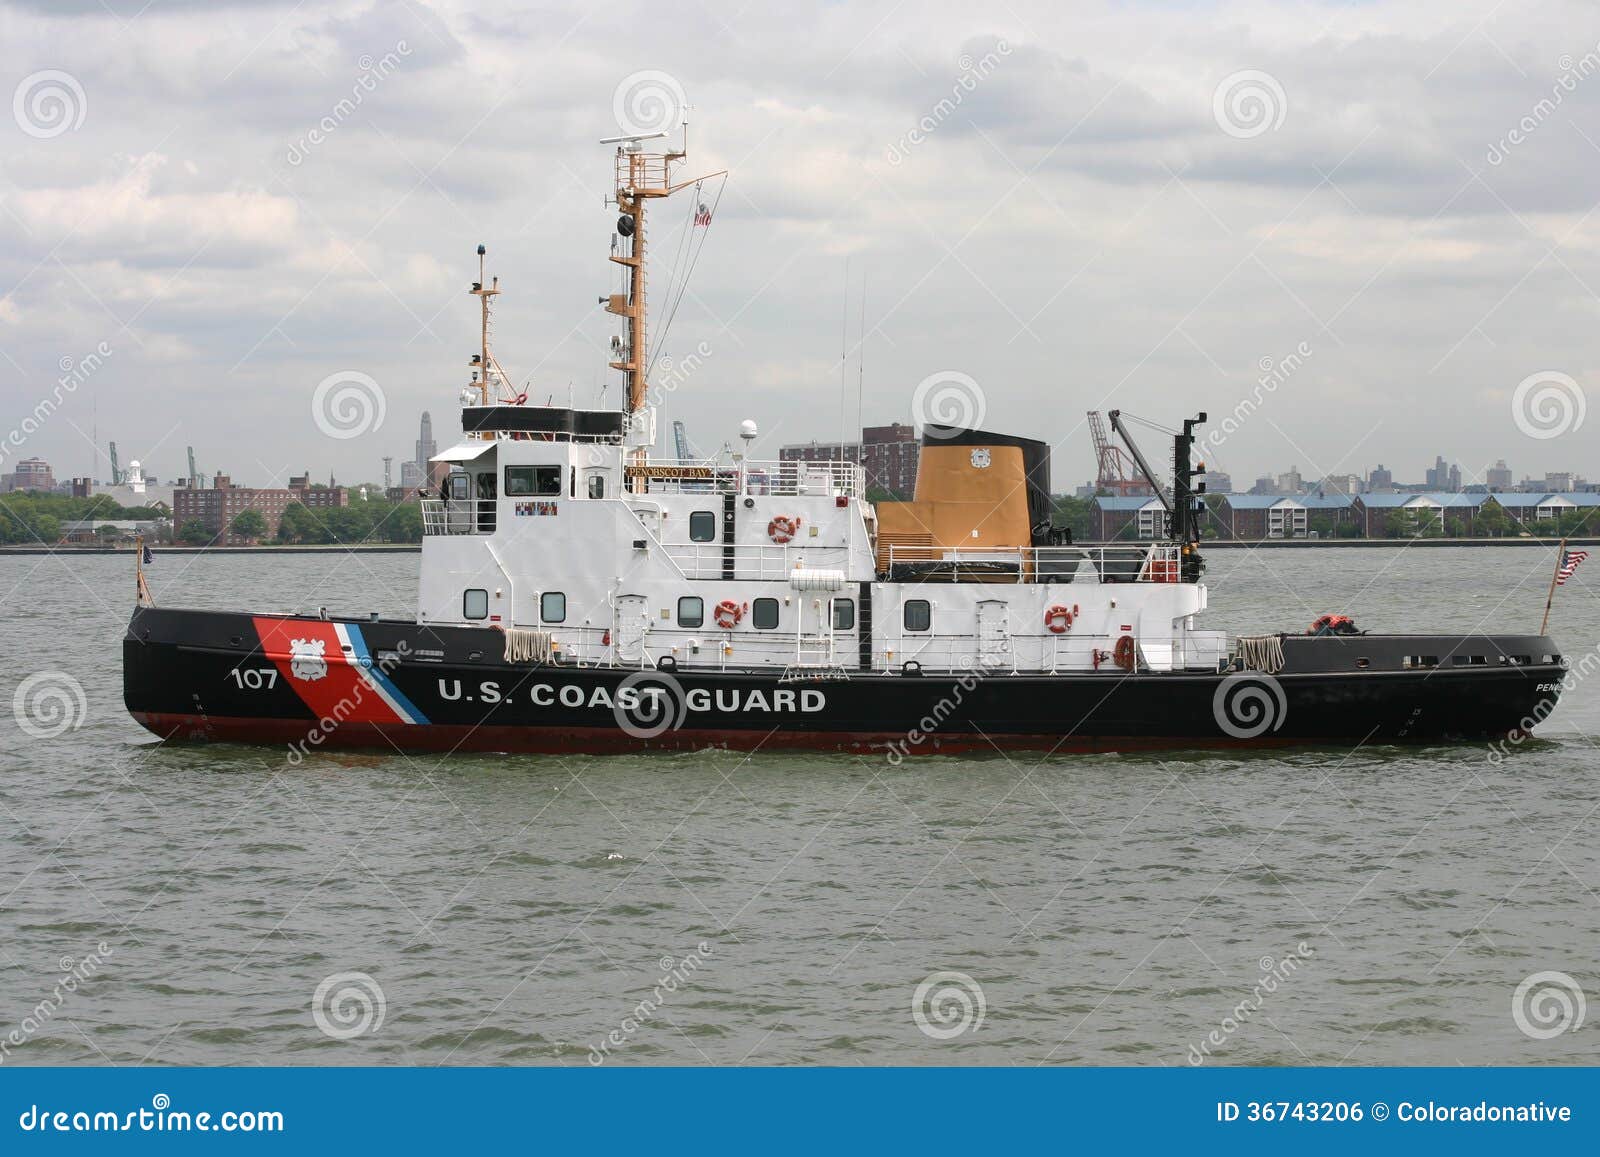 coast guard tug boat editorial photo. image of rescue